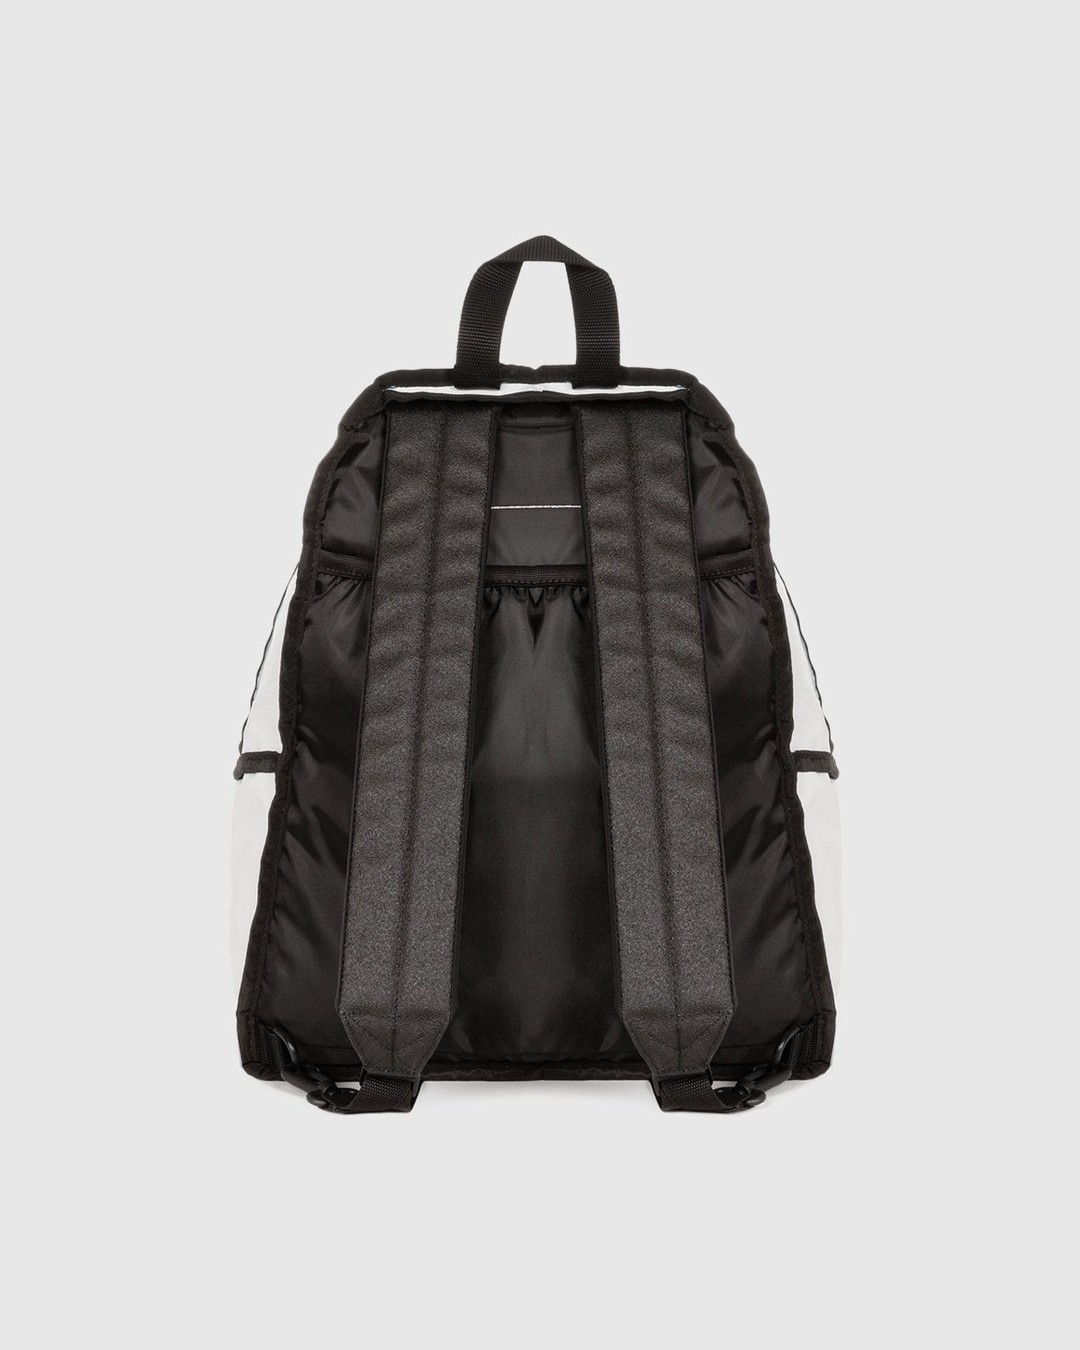 MM6 Maison Margiela x Eastpak – Padded Backpack Black - Bags - Black - Image 2